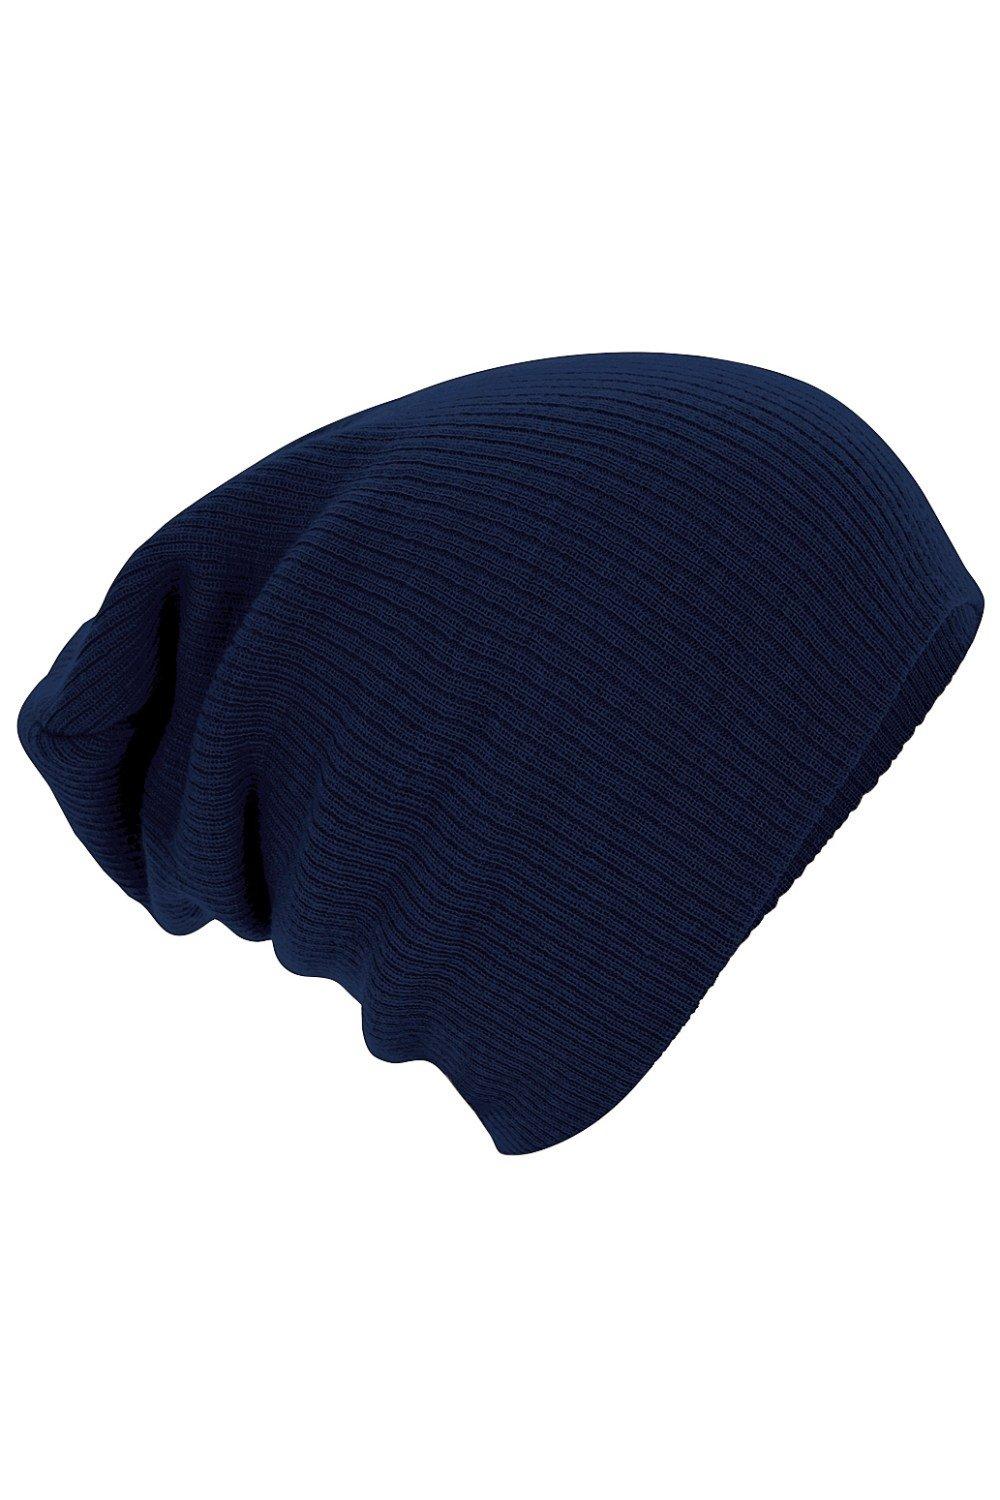 Зимняя шапка-бини с напуском Beechfield, темно-синий